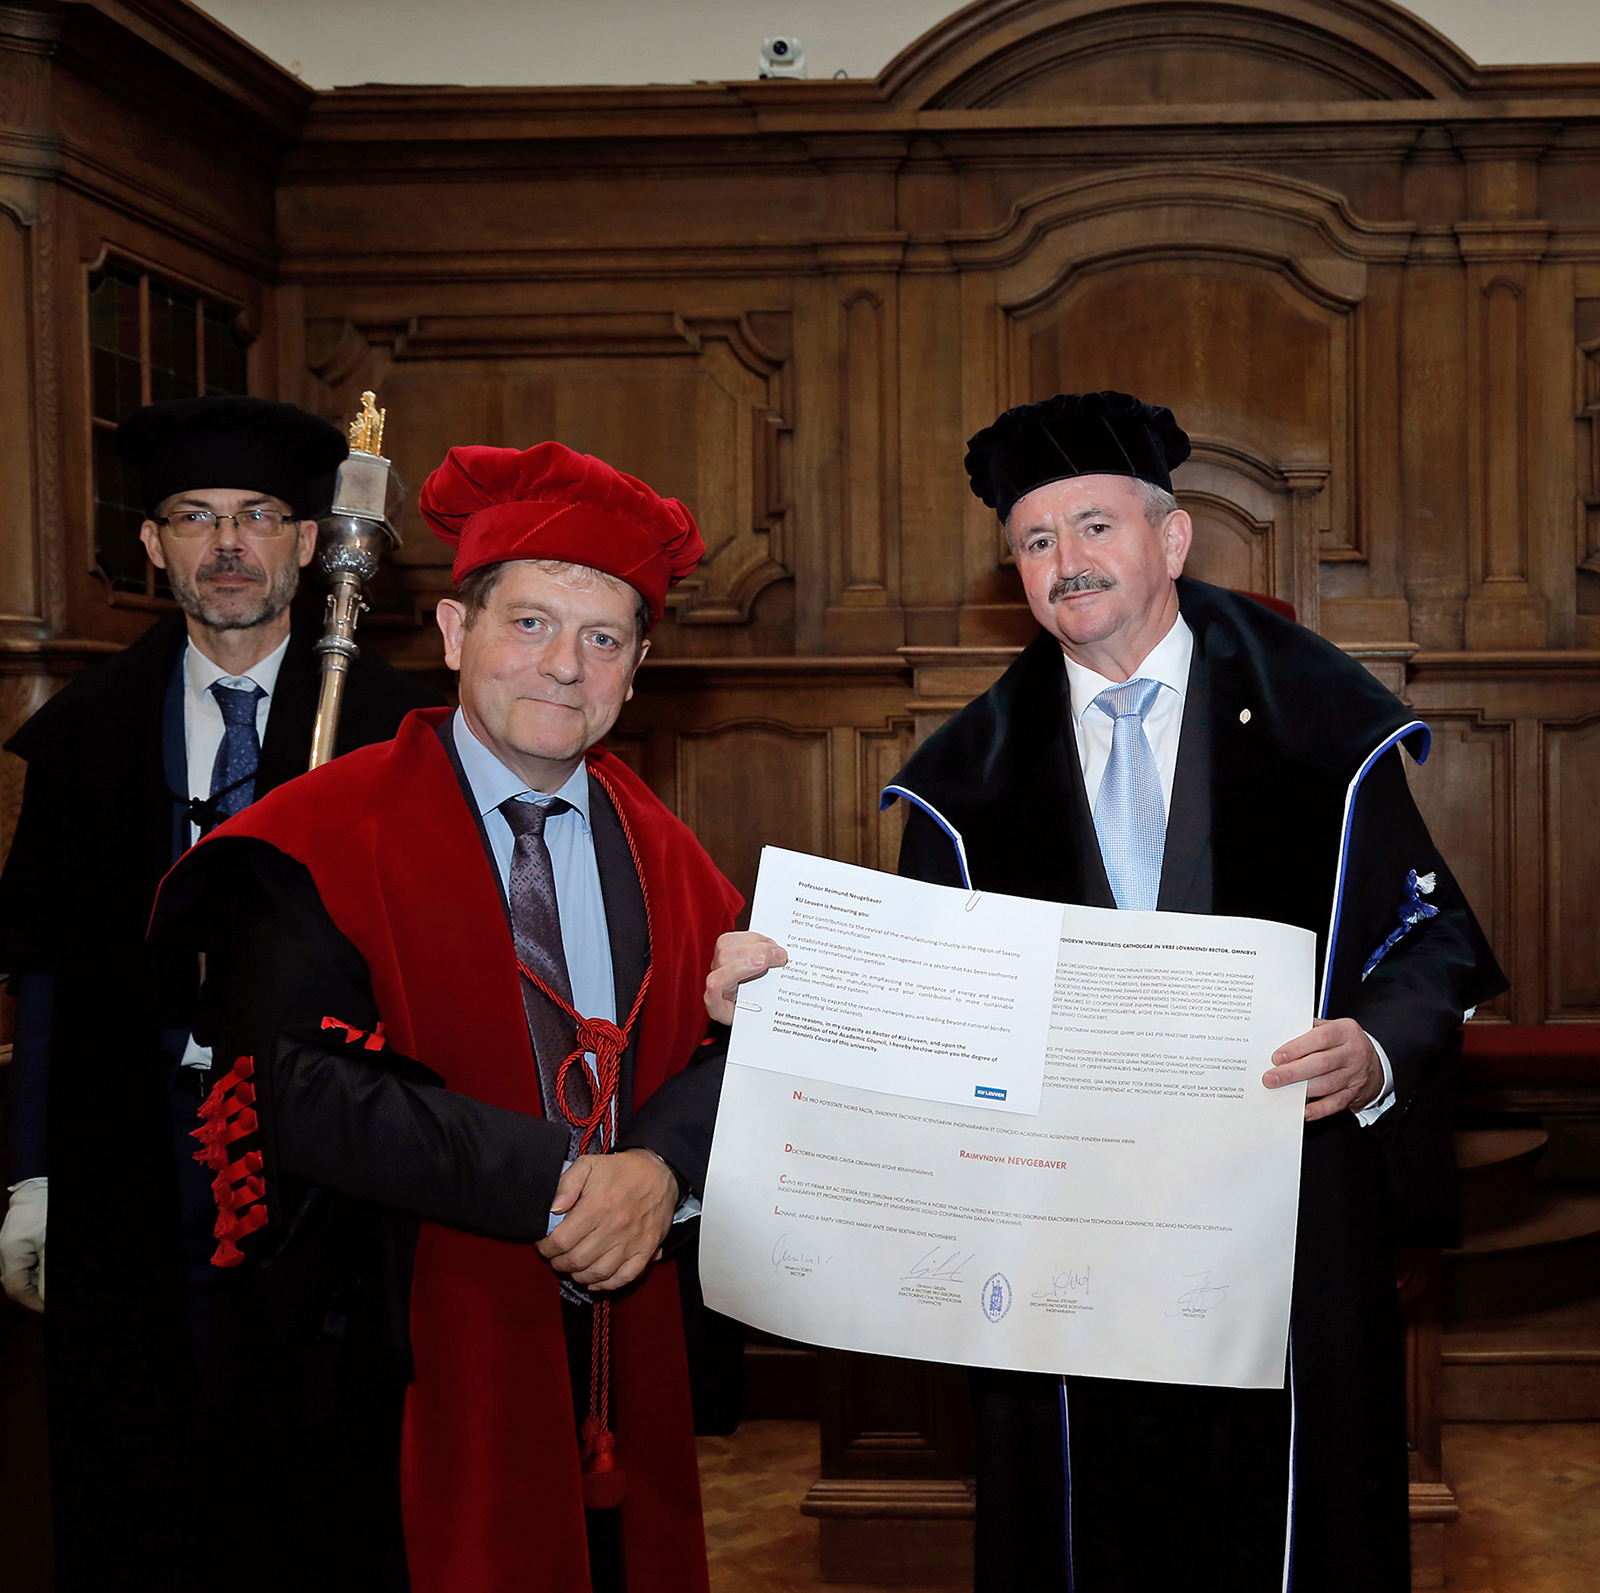 Honorary Doctorate for Fraunhofer President